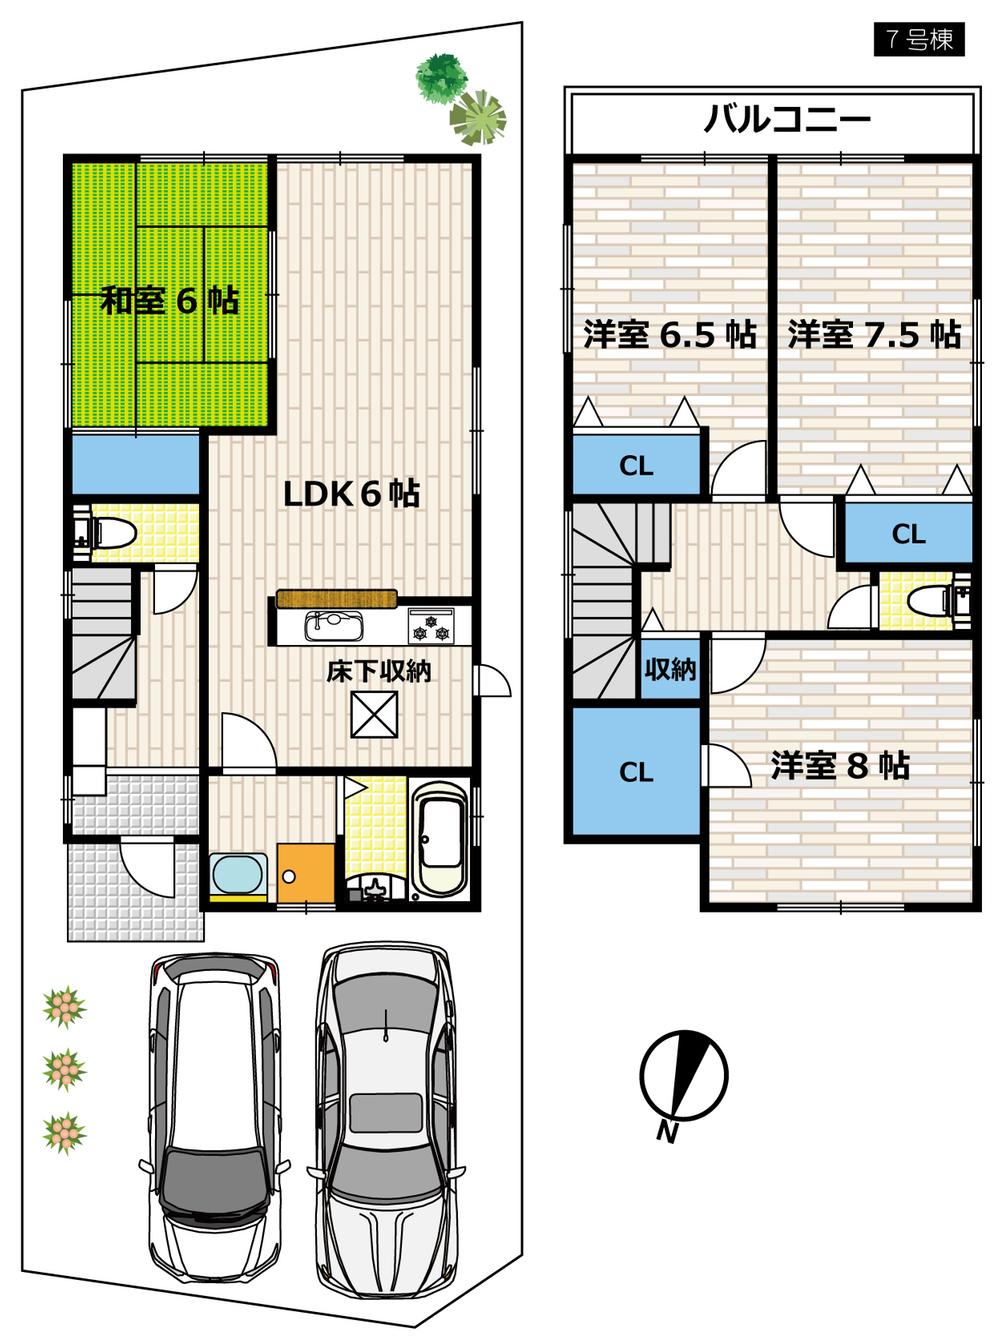 Floor plan. (No. 7 locations), Price 30,800,000 yen, 4LDK, Land area 143.51 sq m , Building area 105.98 sq m